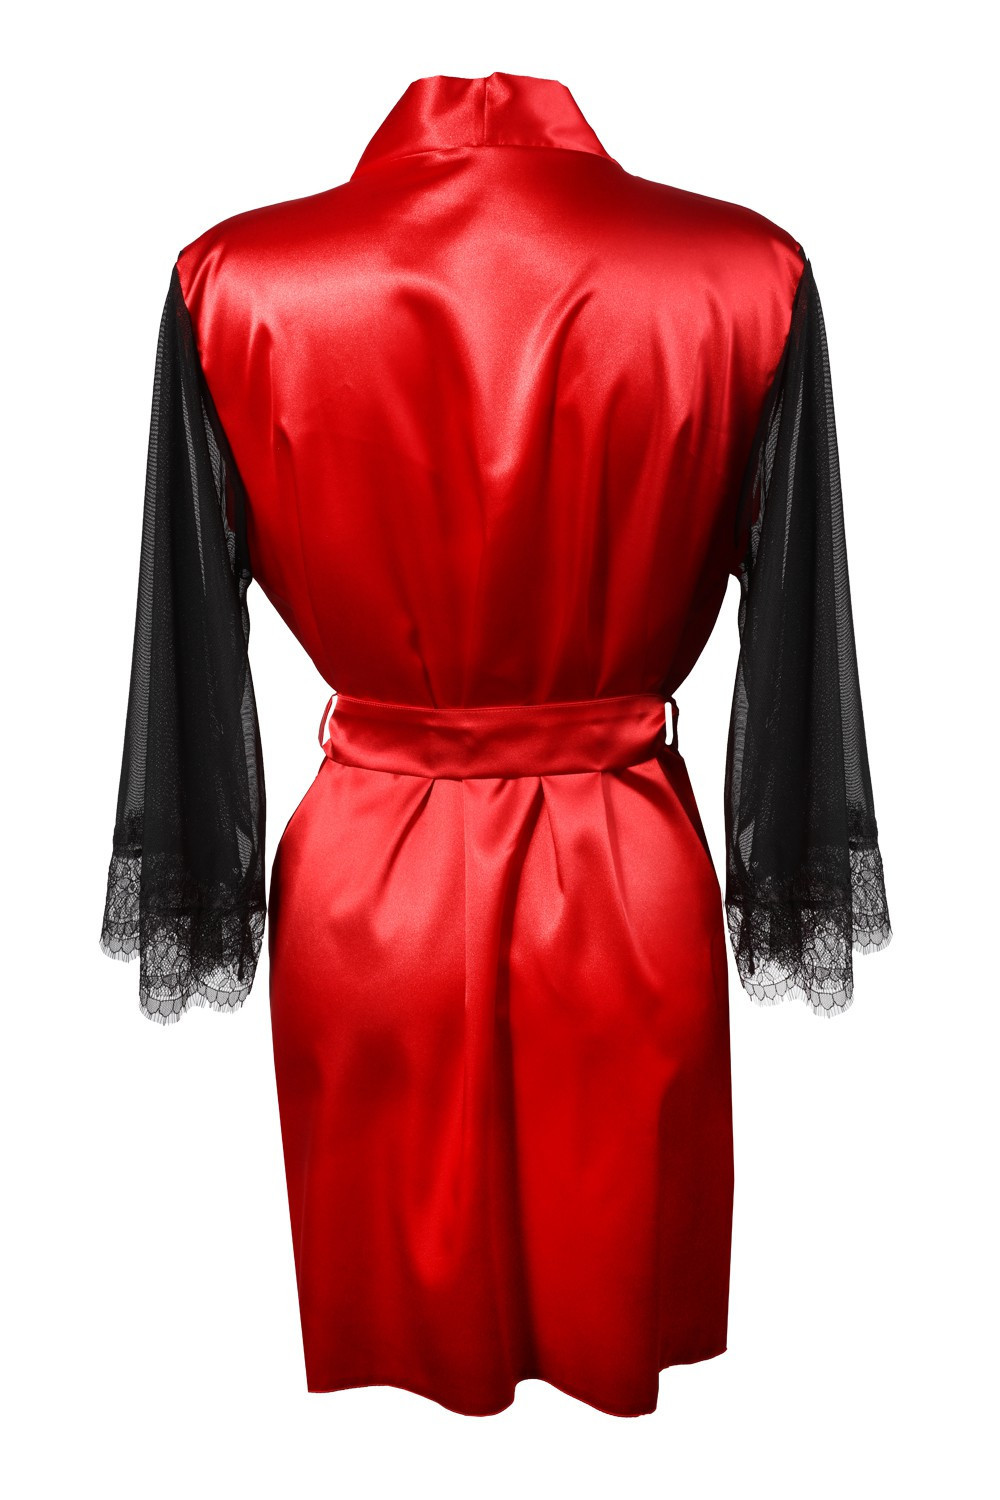 Housecoat model 18227296 Red L Red - DKaren